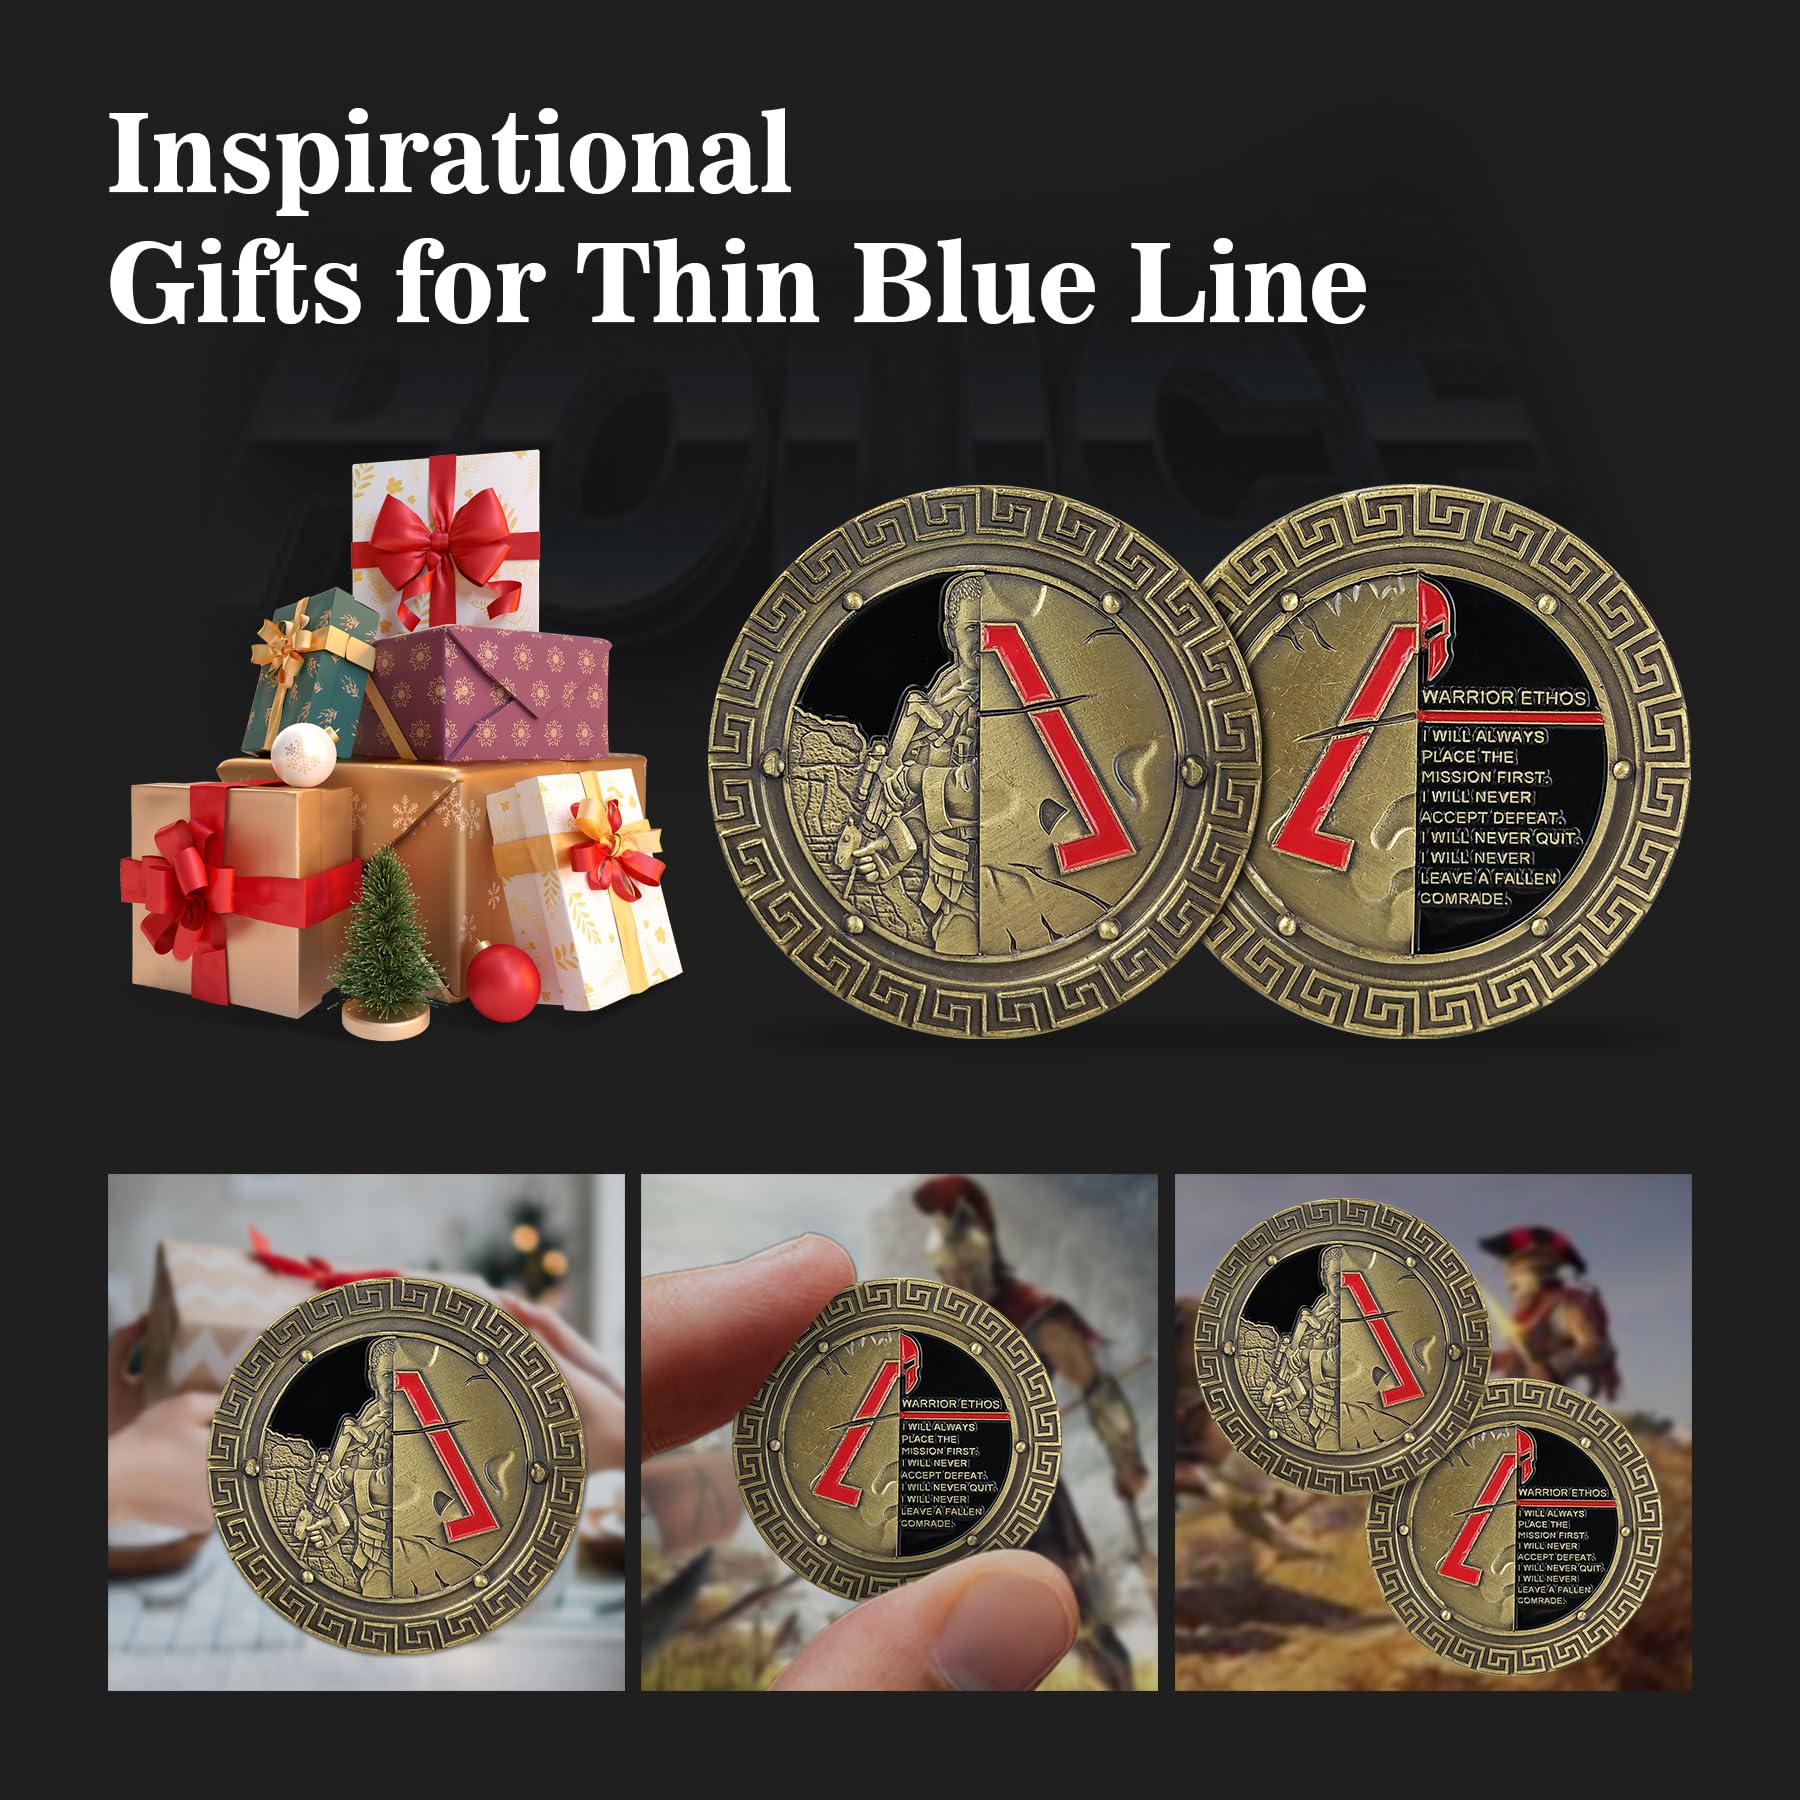 BHealthLife Spartan Warrior Ethos Challenge Coin Military Gift